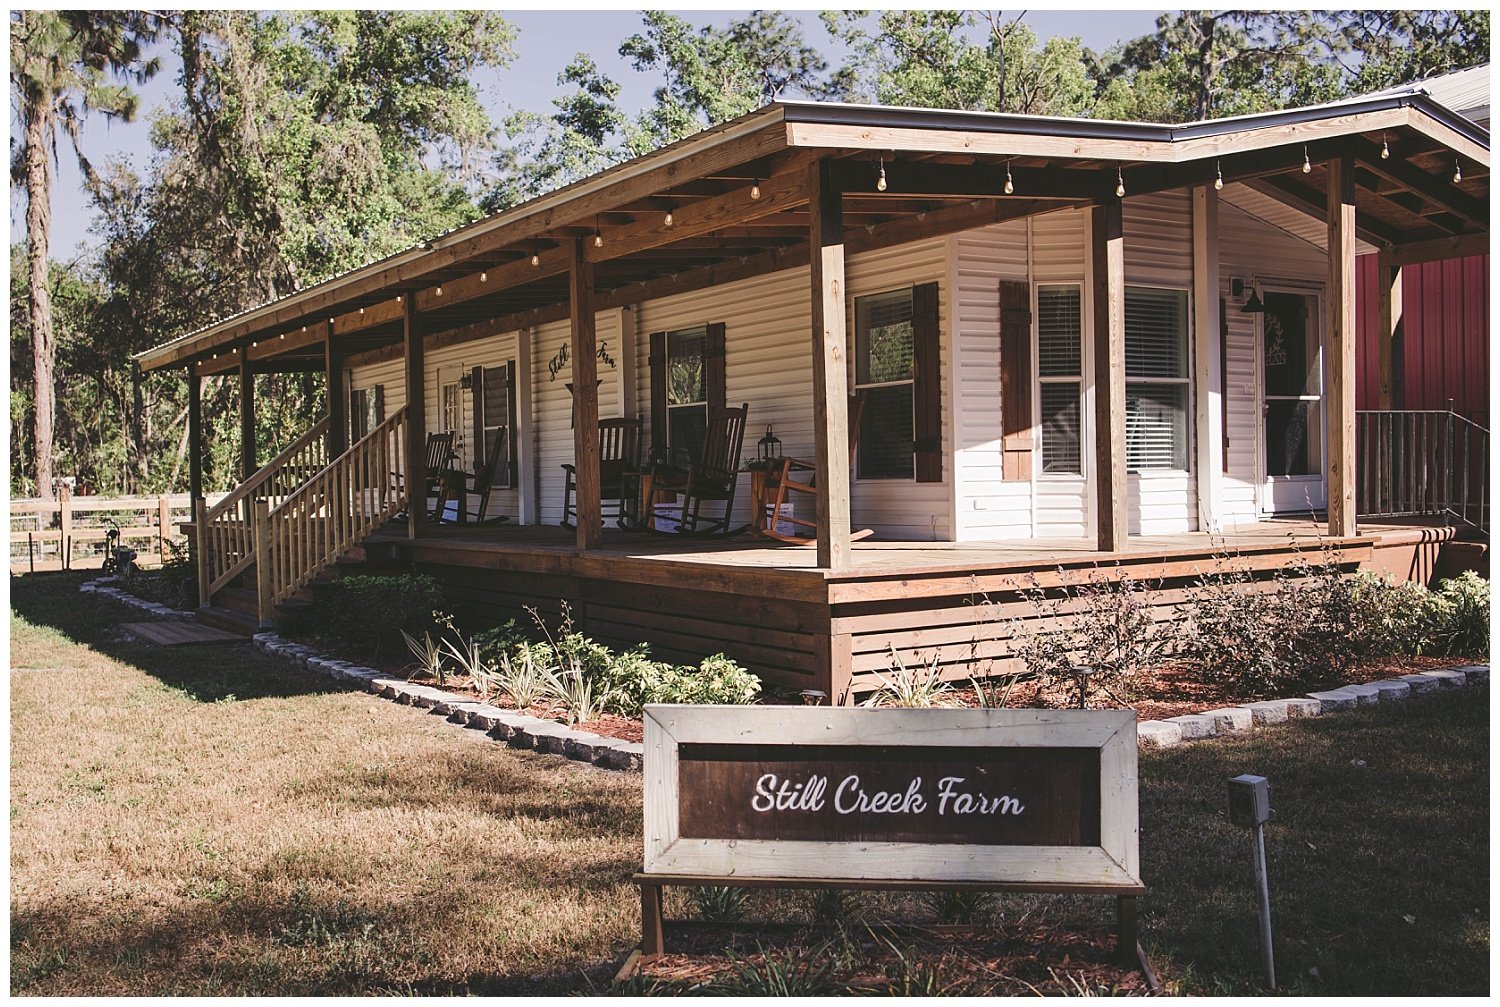 Still Creek Farm: A Serene Haven for Picture-Perfect Wedding Celebrations